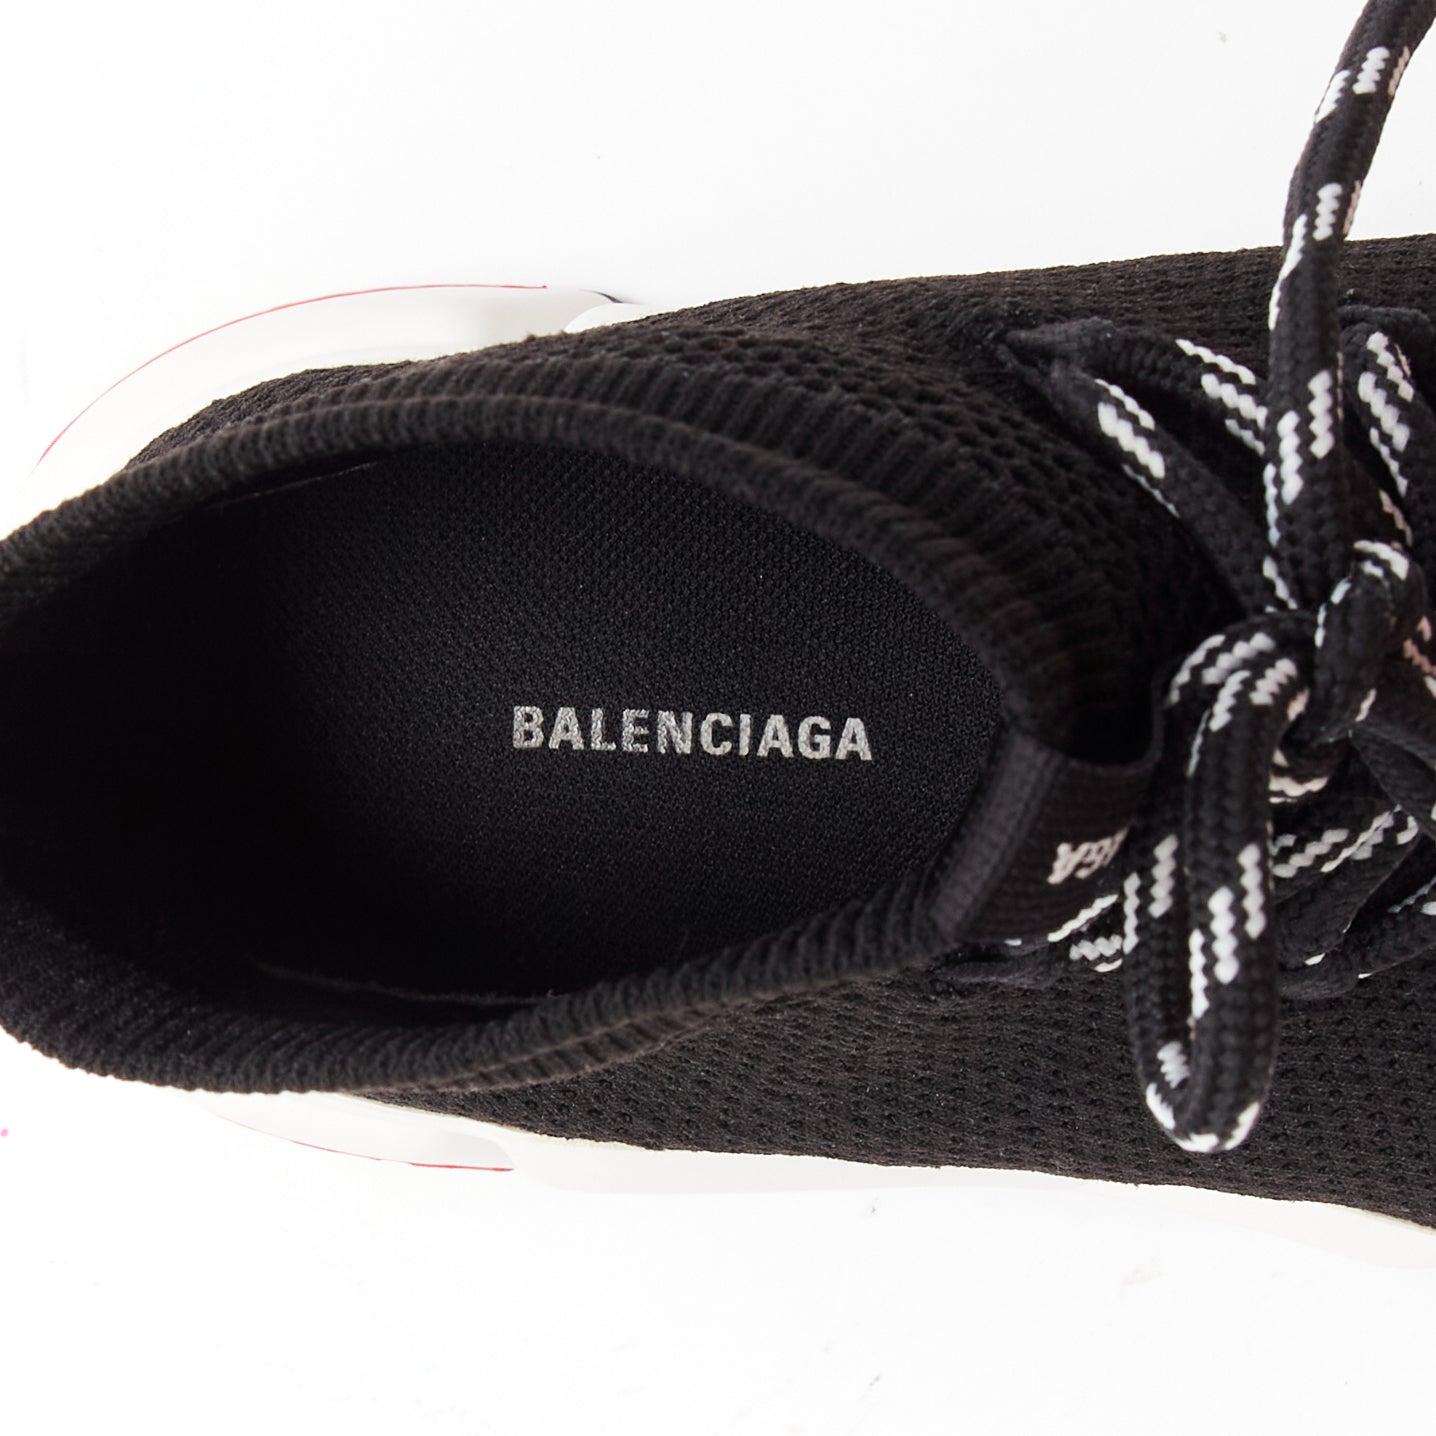 BALENCIAGA Speed noir blanc rouge logo chaussettes lacées EU40 en vente 5